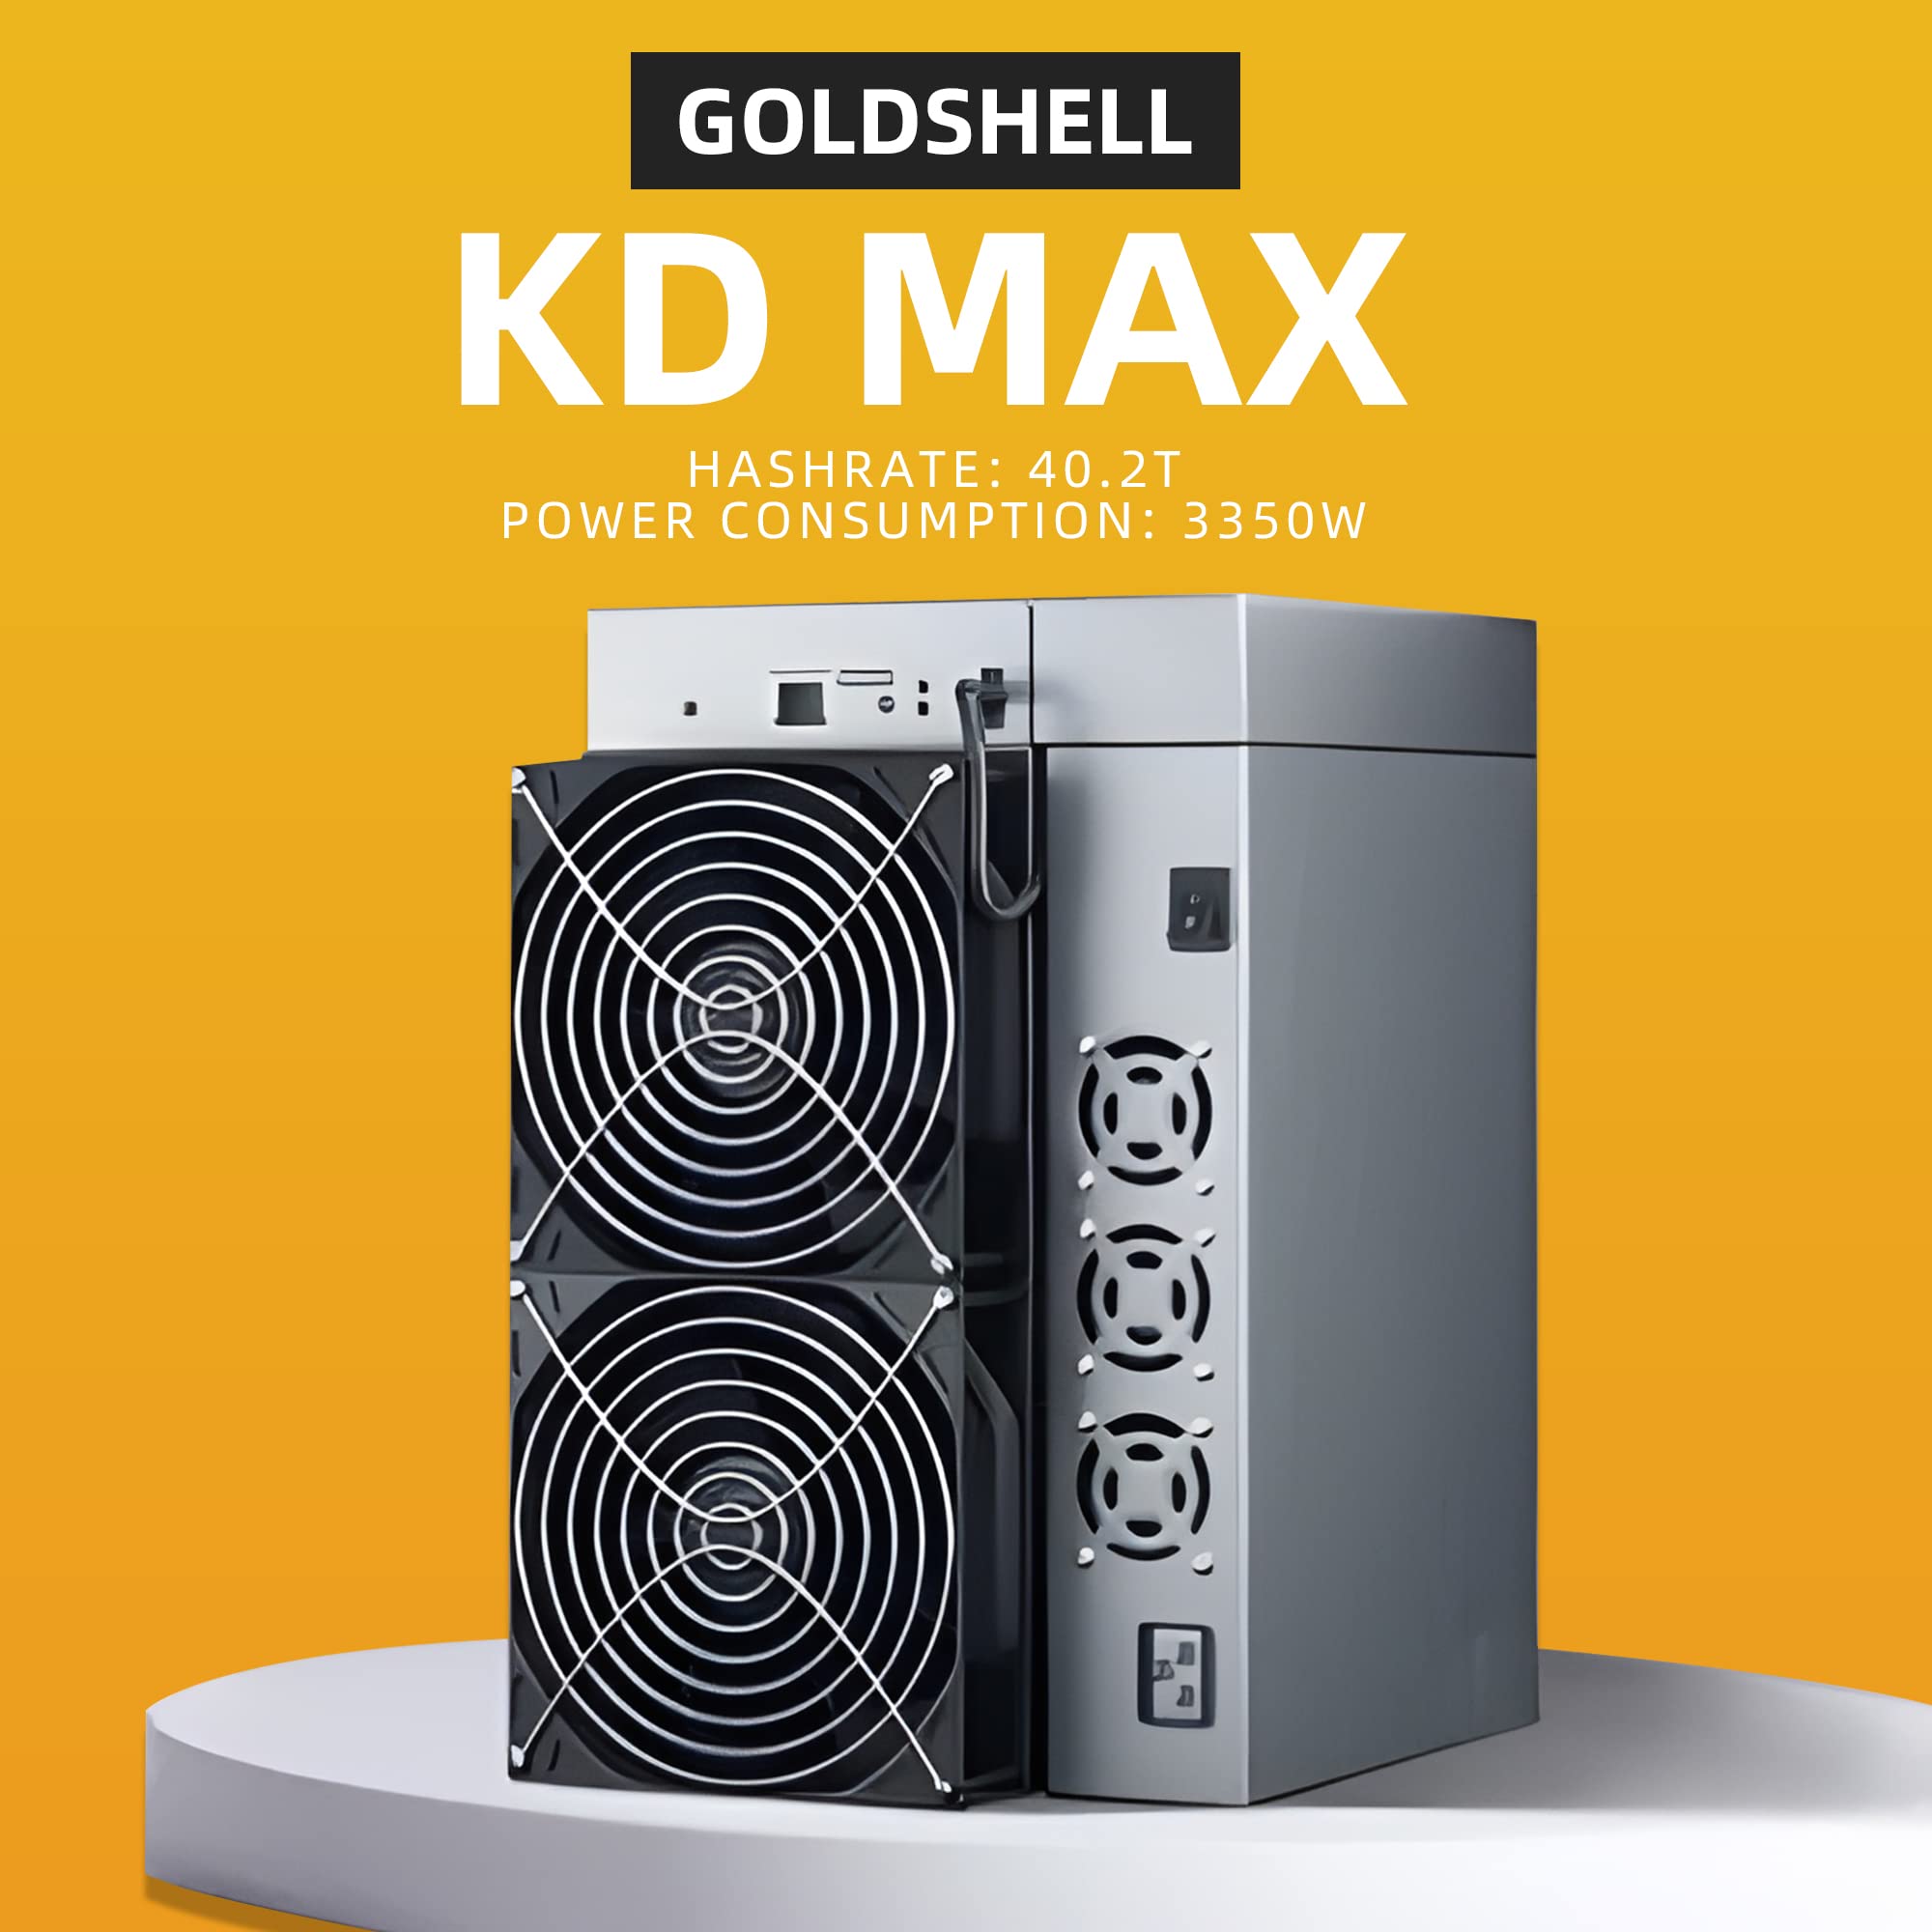 Goldshell KD MAX 40.2TH/S Kadena Miner KDA Miner 3350W Goldshell Kadena Miner Include PSU Power Supply -New